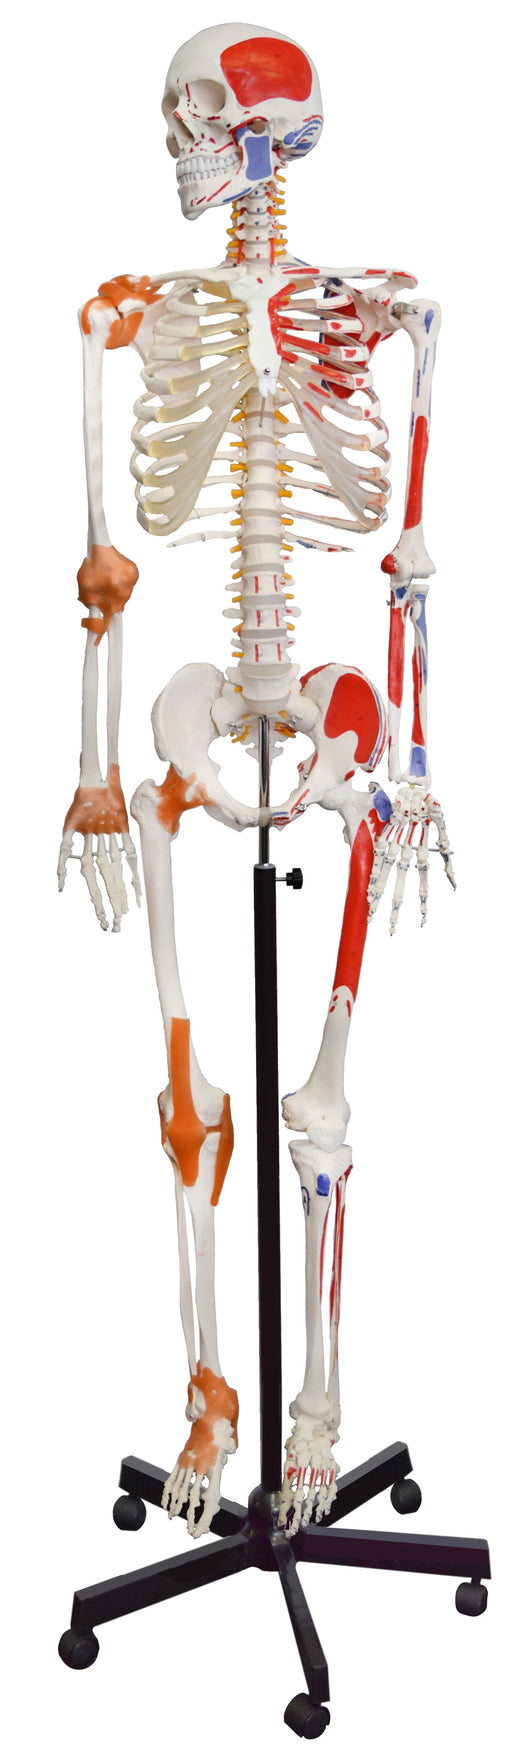 Modelo de esqueleto humano, tamaño medio - con terminaciones nerviosas -  Soporte colgante - Detalle increíble para estudio anatómico - Eisco Labs